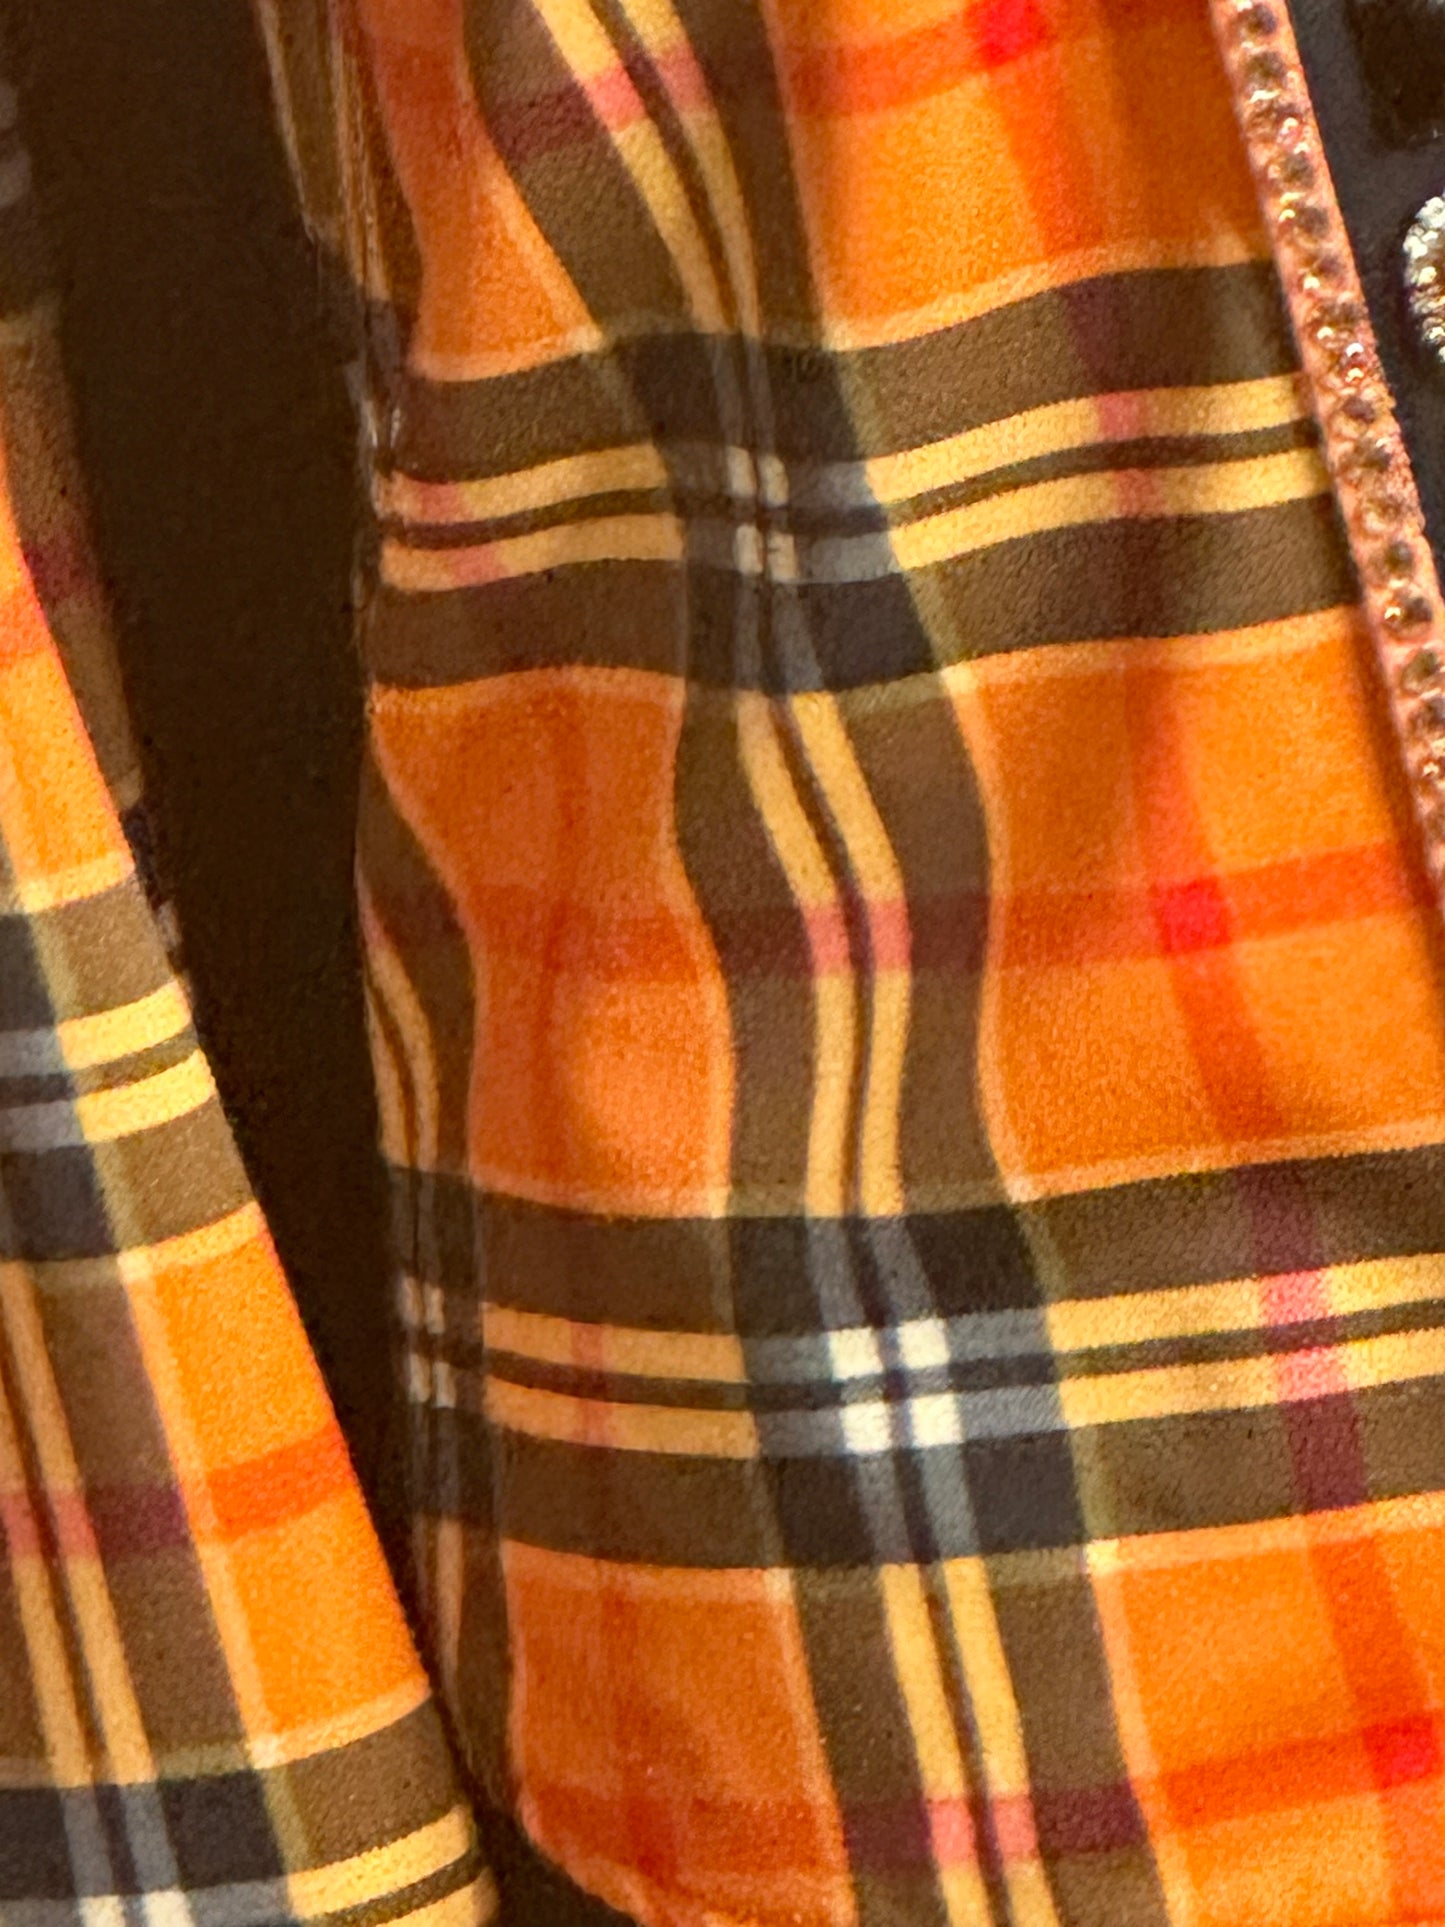 Extra small day shirt orange plaid back zip horsemanship DELUXE!!!!!!!!!!!!!